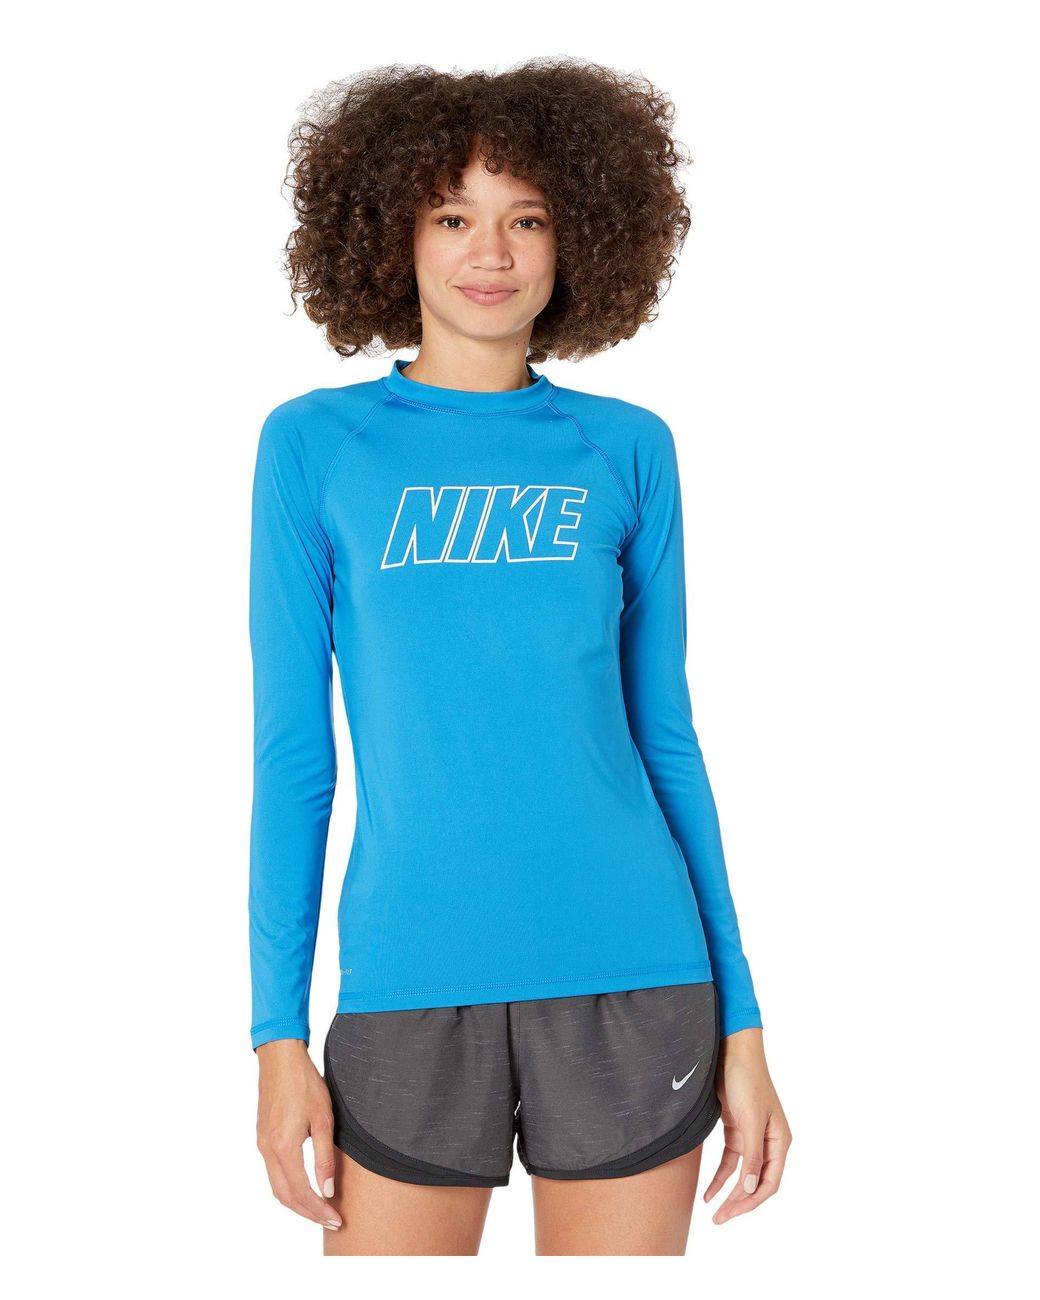 Nike Swim Upf 40+ Short Sleeve Rashguard Swim Tee in Blue - Lyst